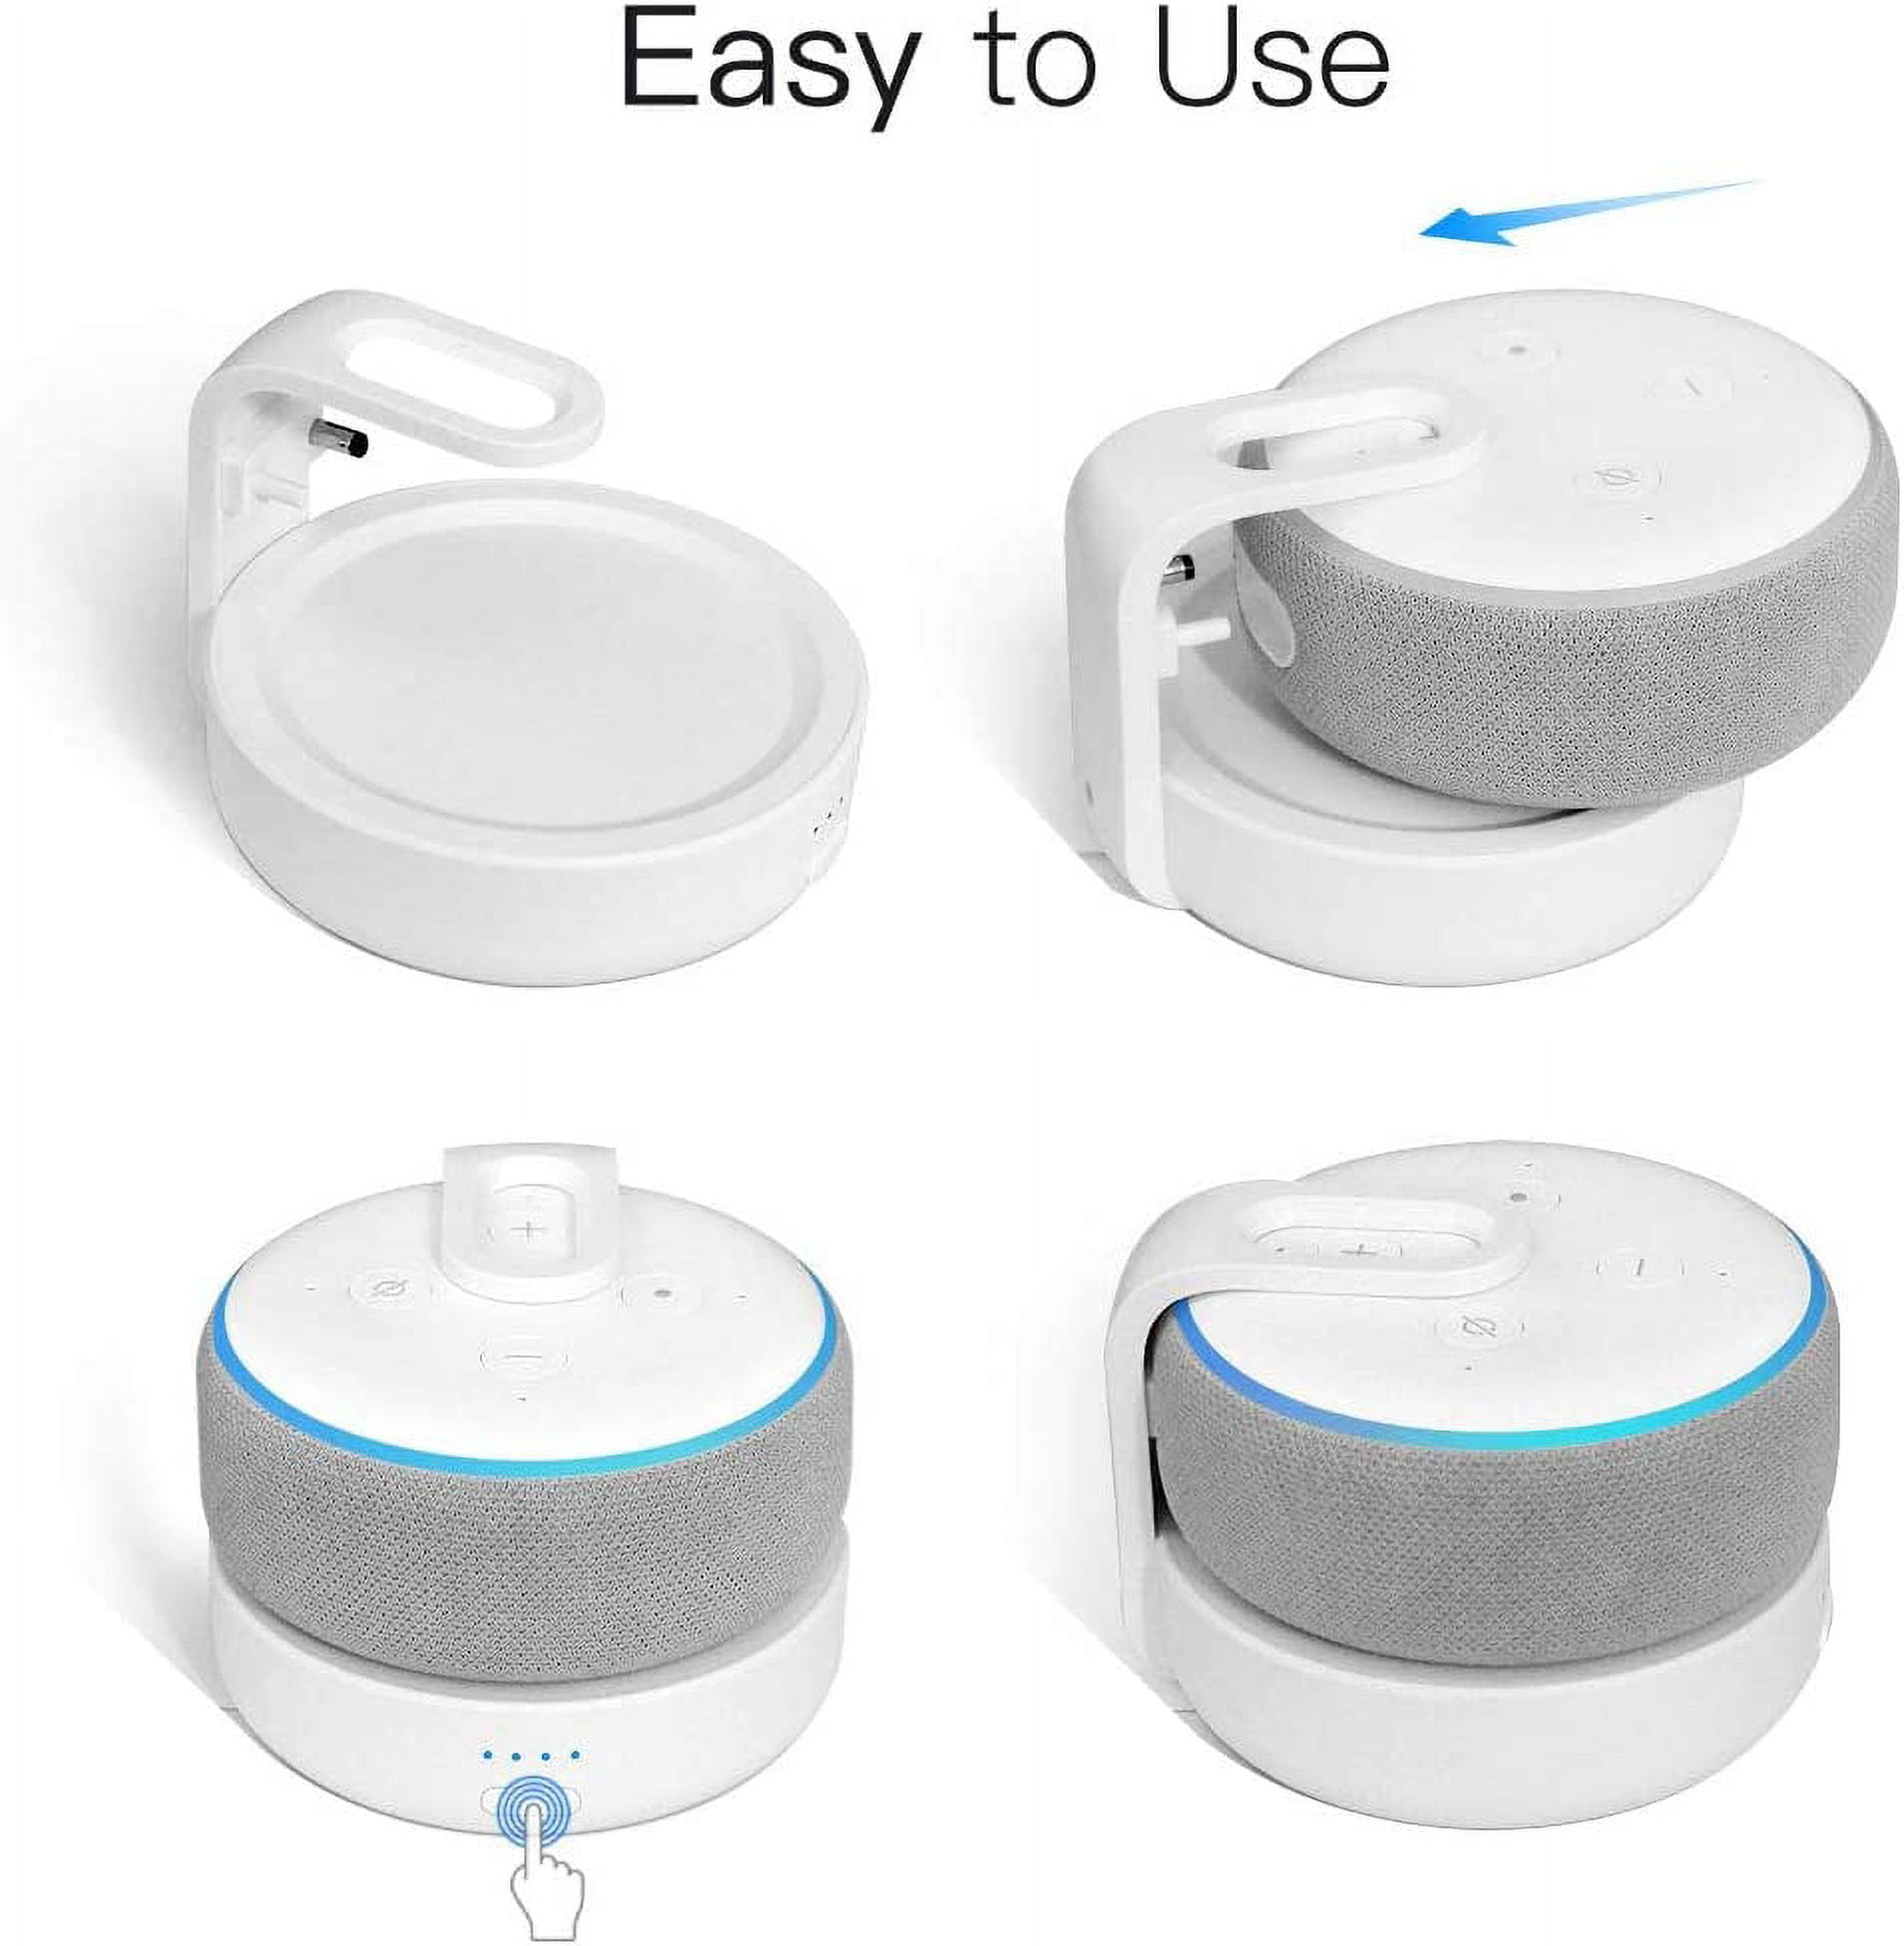 Best Buy: Ninety7 DOX Portable Battery Base for  Echo Dot